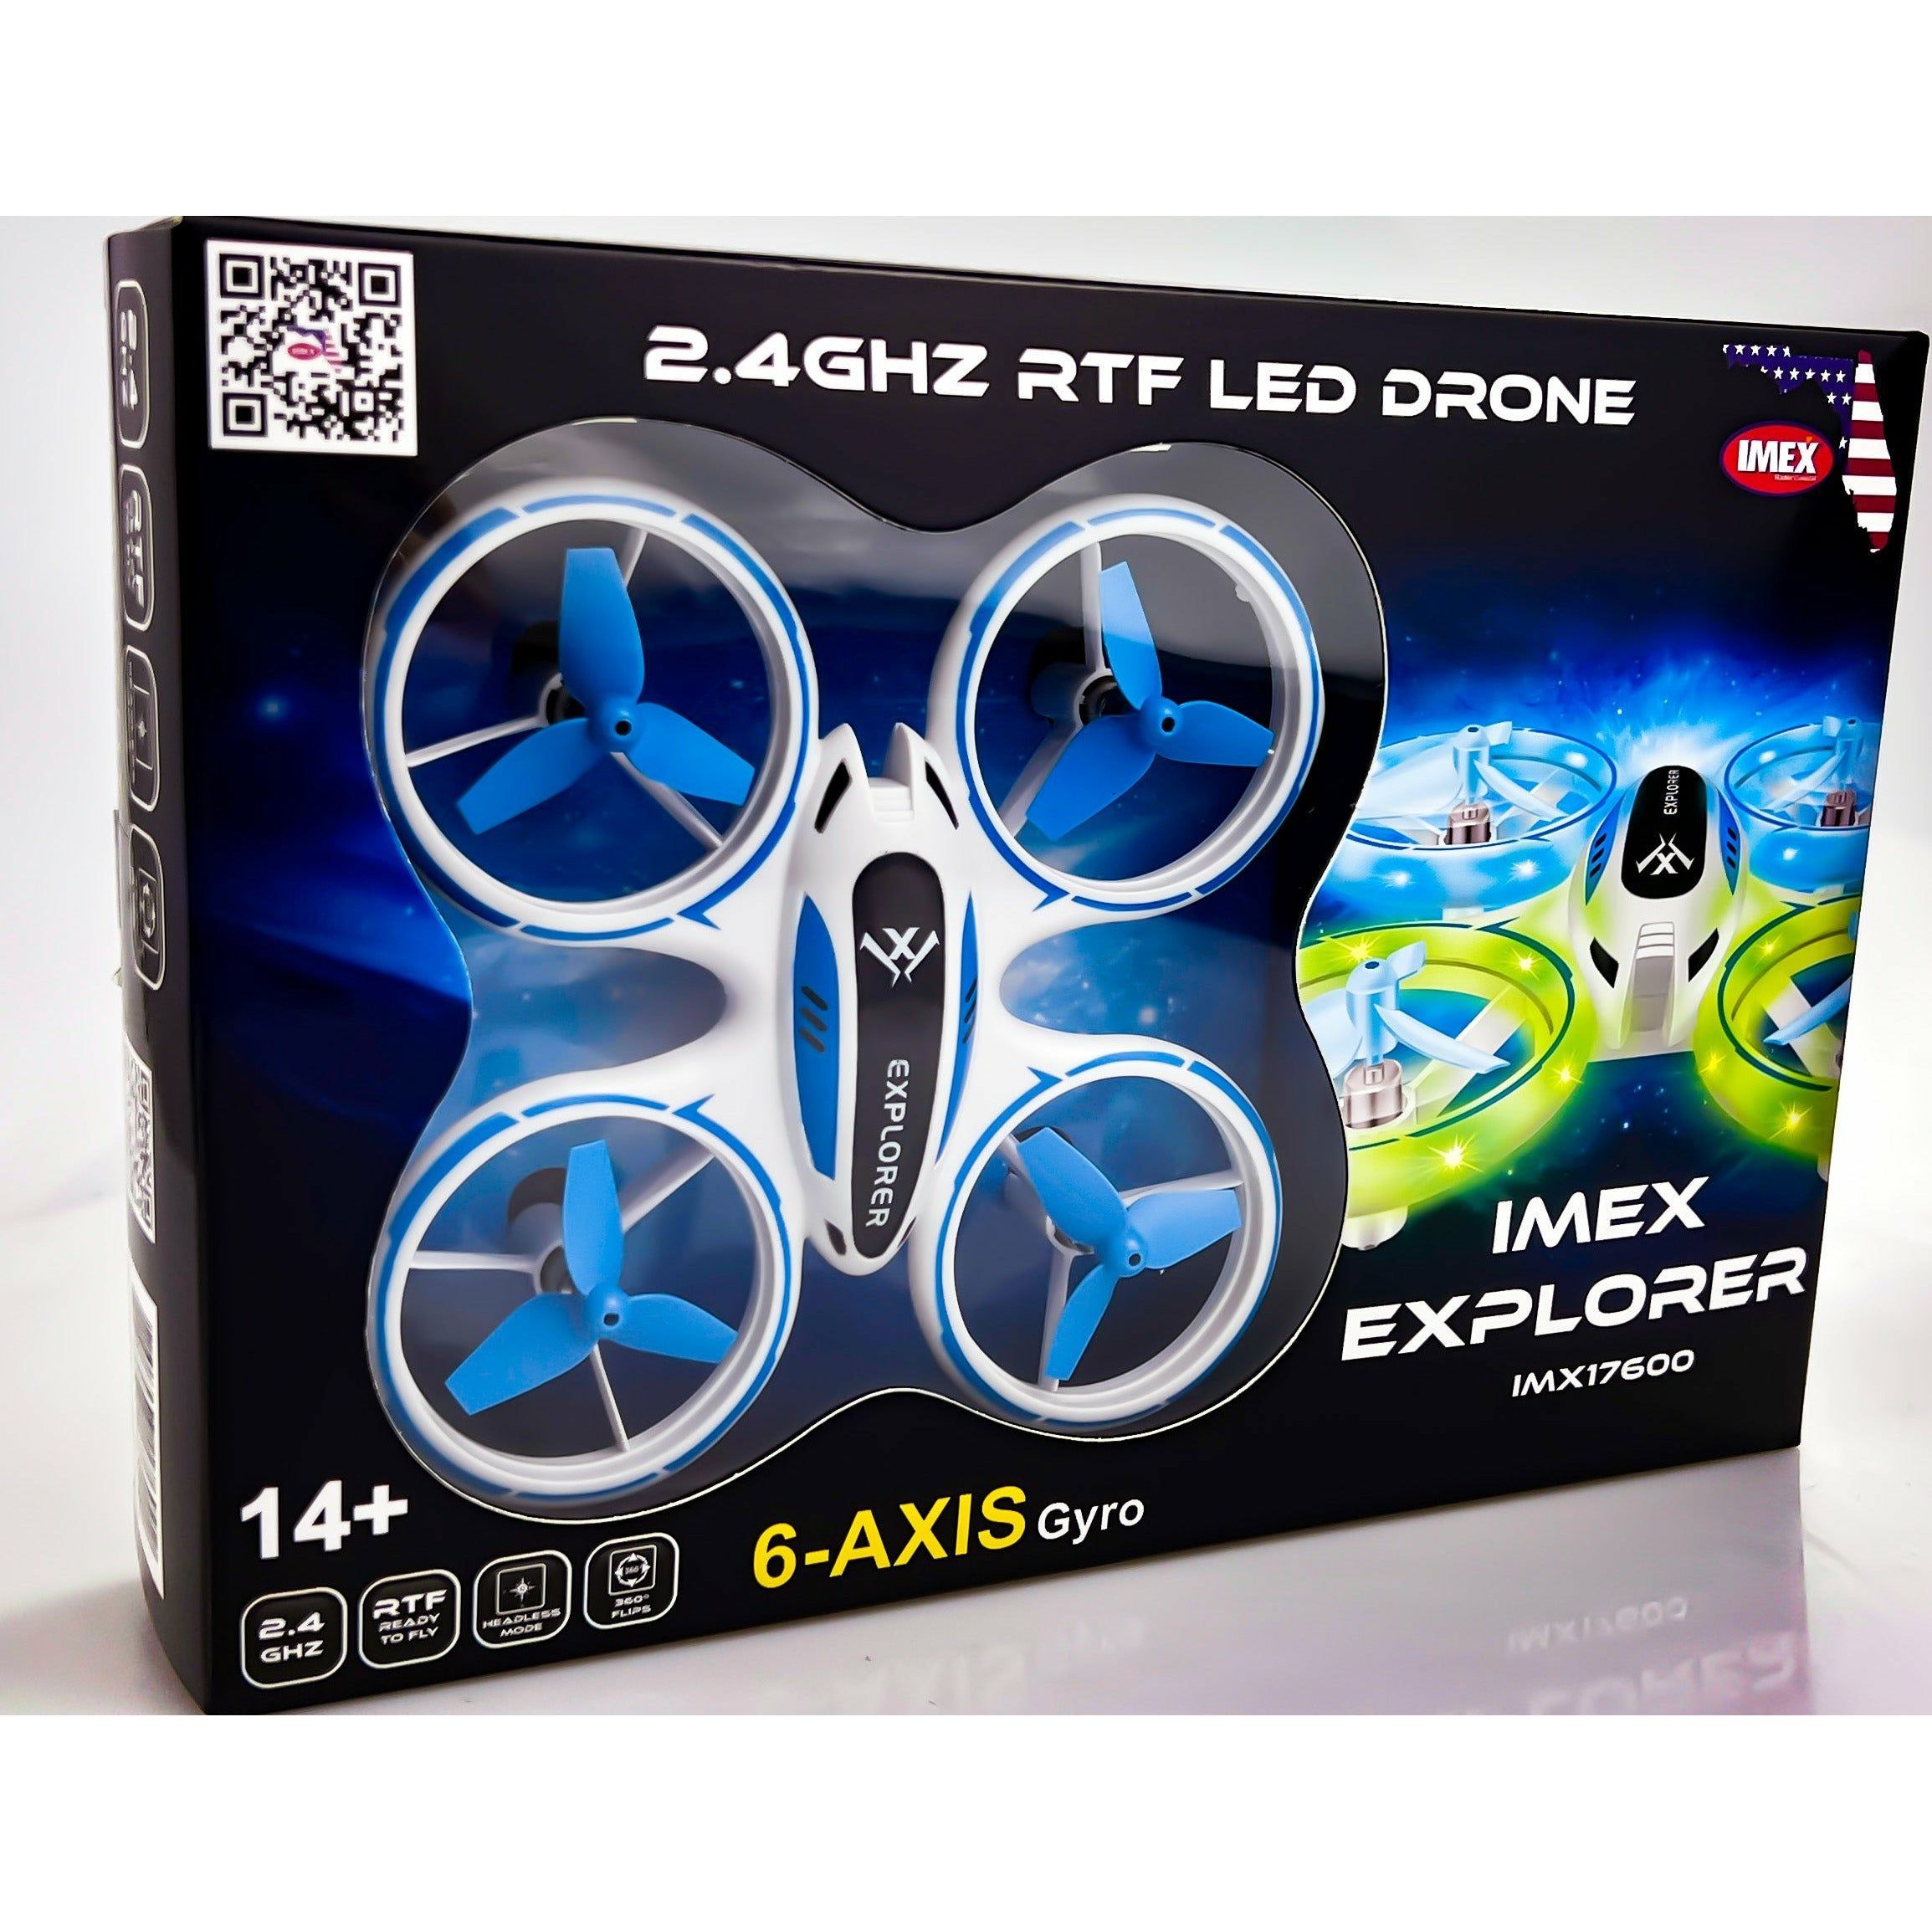 IMEX Explorer 2.4 GHz 6-Axis Gyro Quadcopter RC Drone